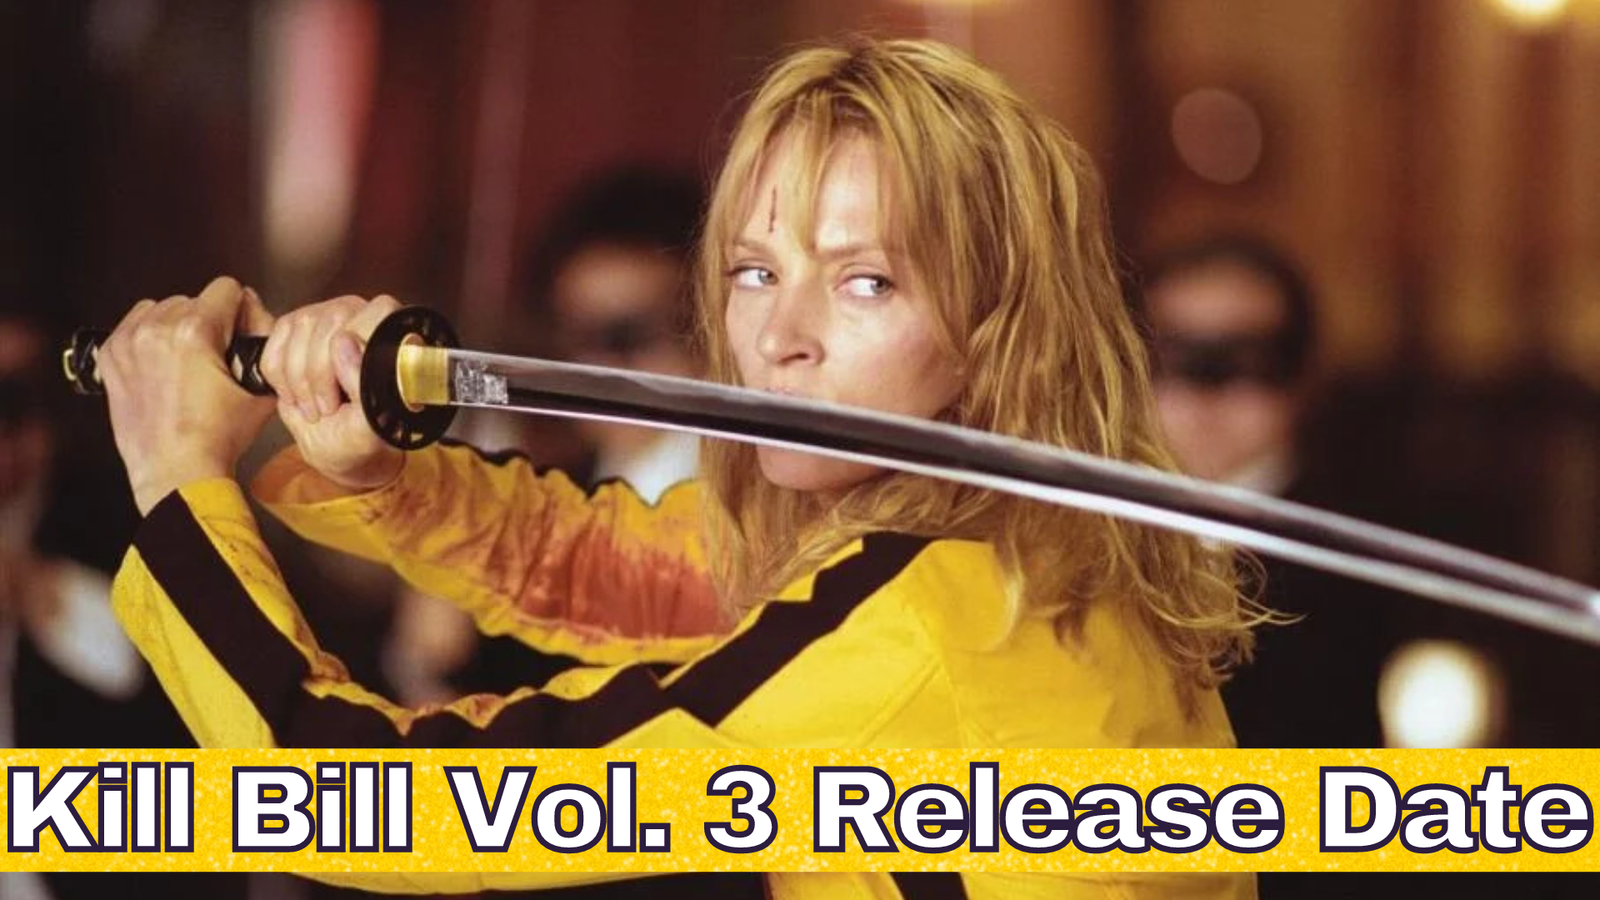 Kill Bill Vol. 3 Release Date, Trailer - Will There Be Another Kill Bill Movie?